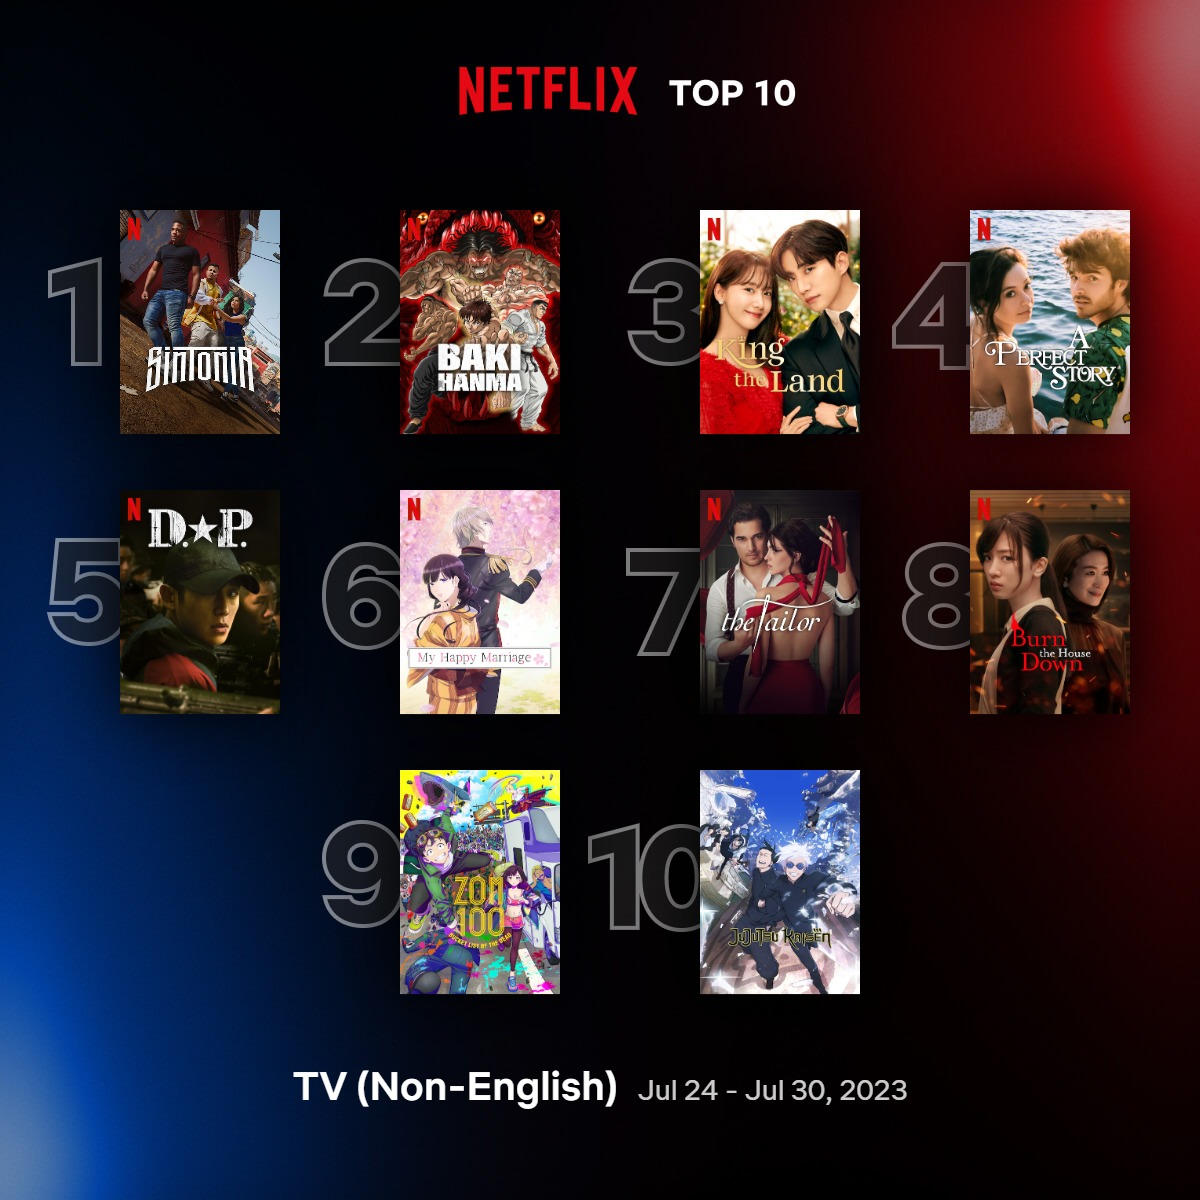 Top 10 Netflix Anime